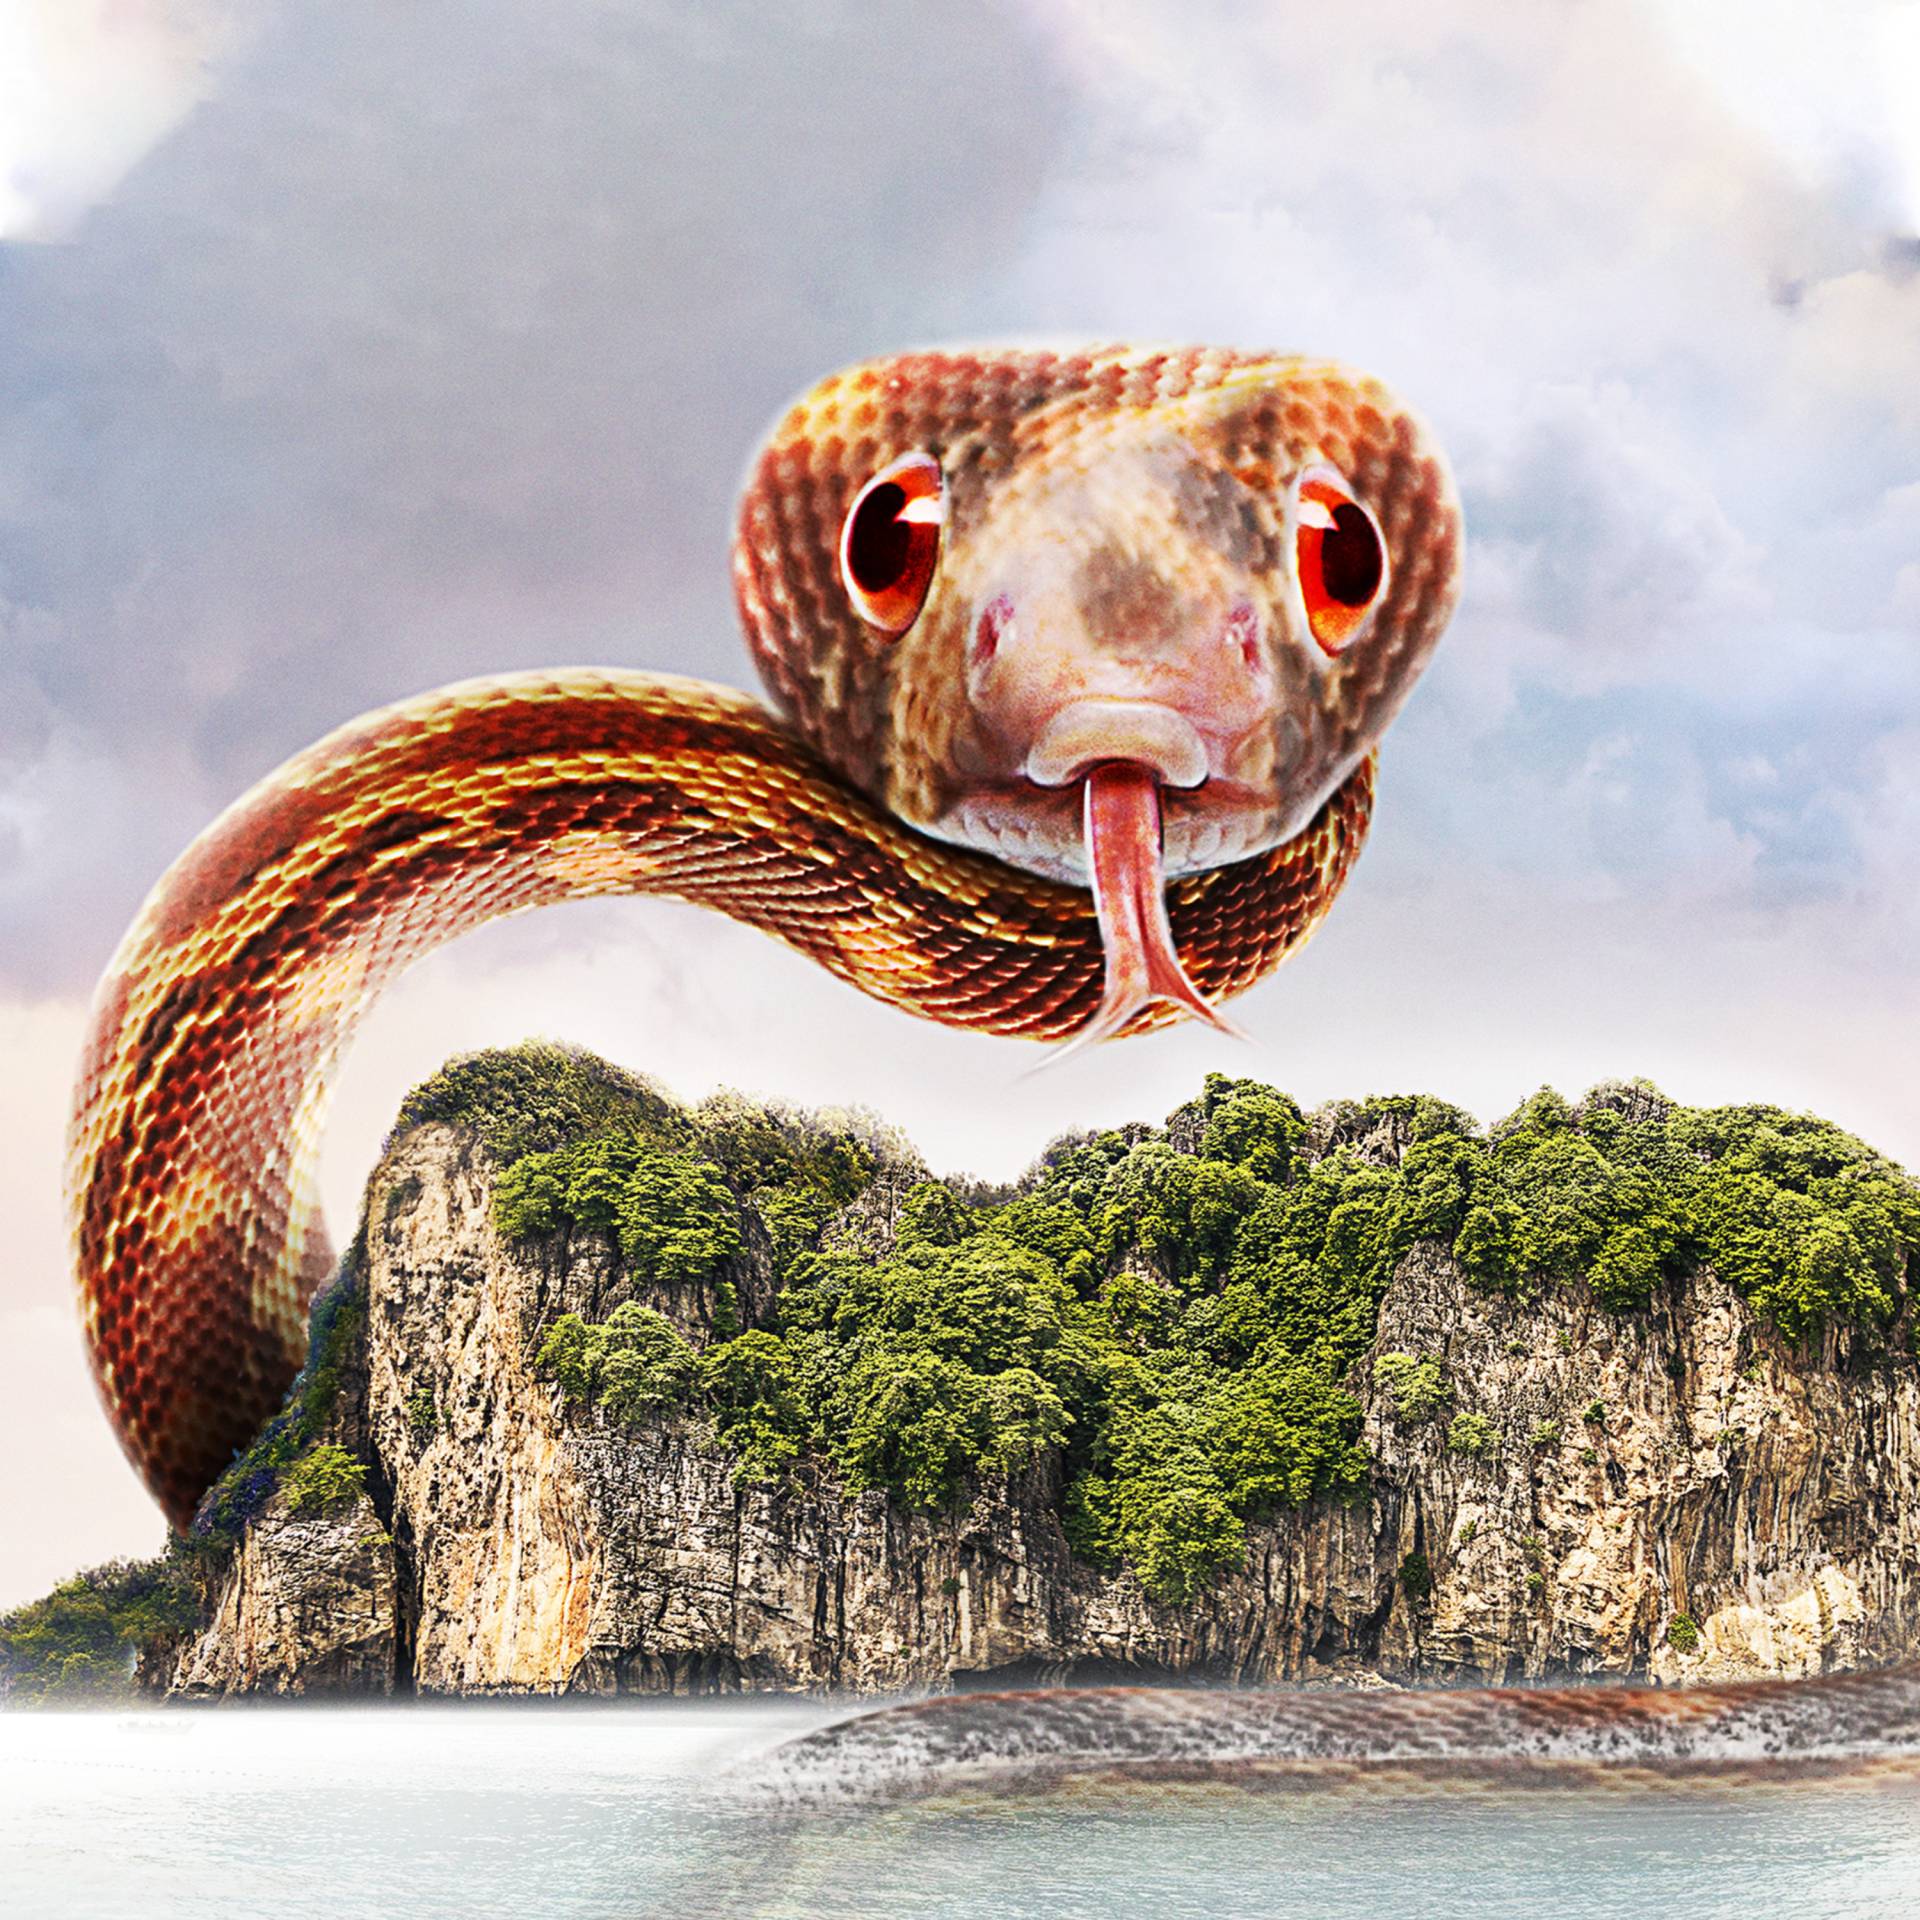 Ilha das Cobras - Wikipedia